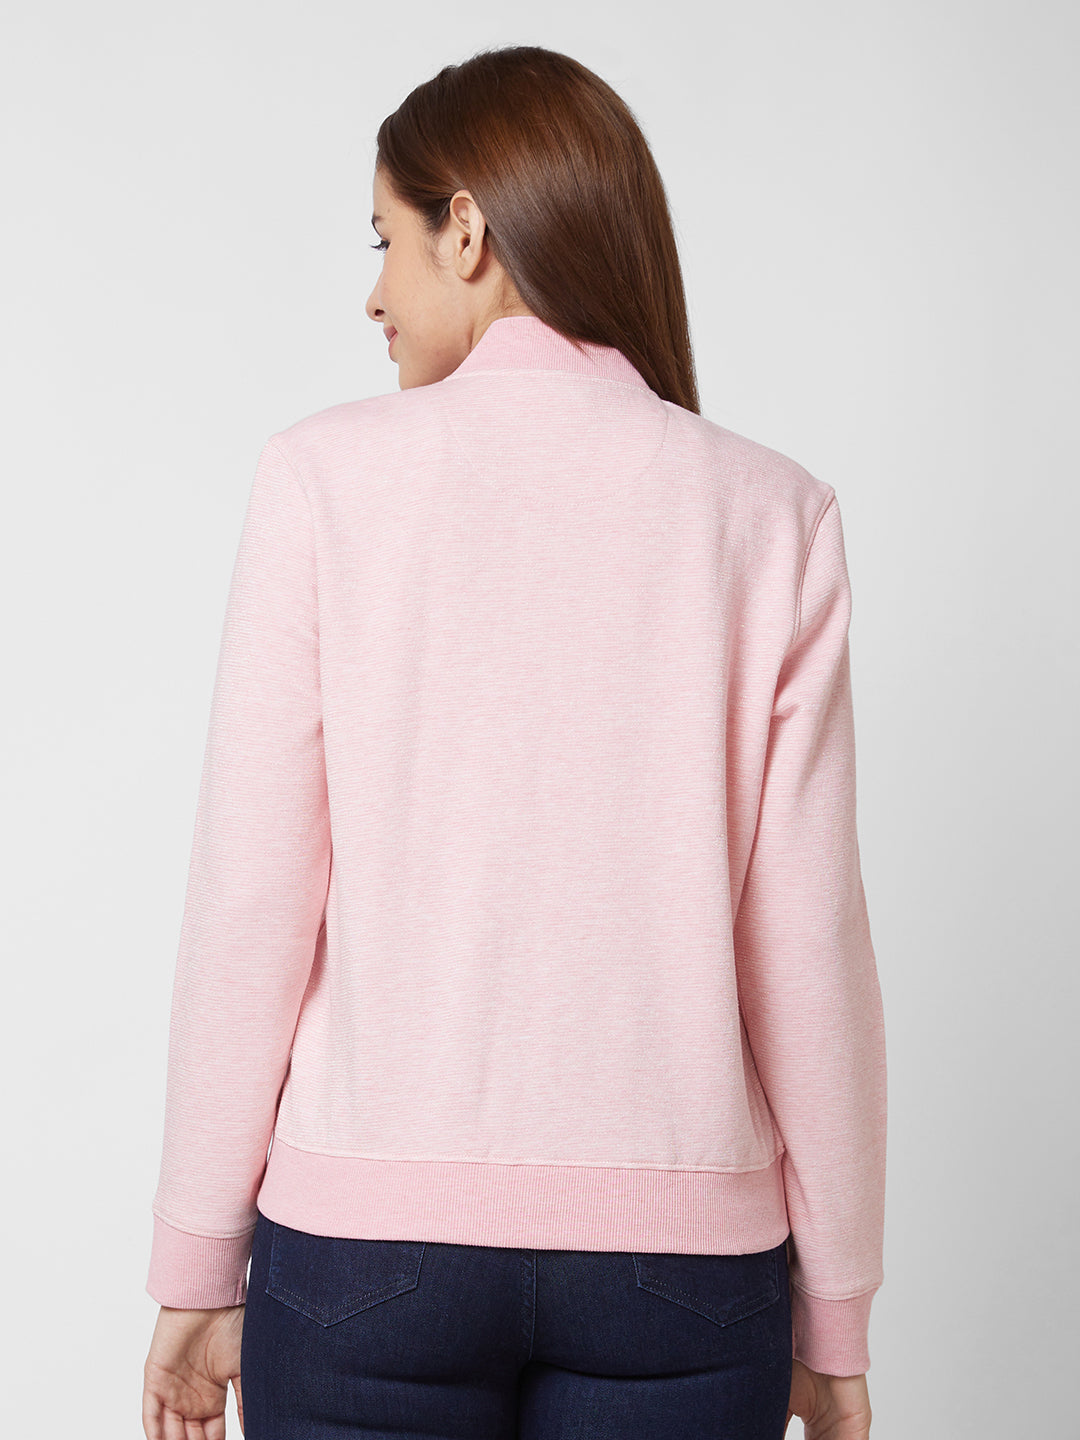 Spykar Round Neck Full Sleeve Pink Sweatshirt For Women